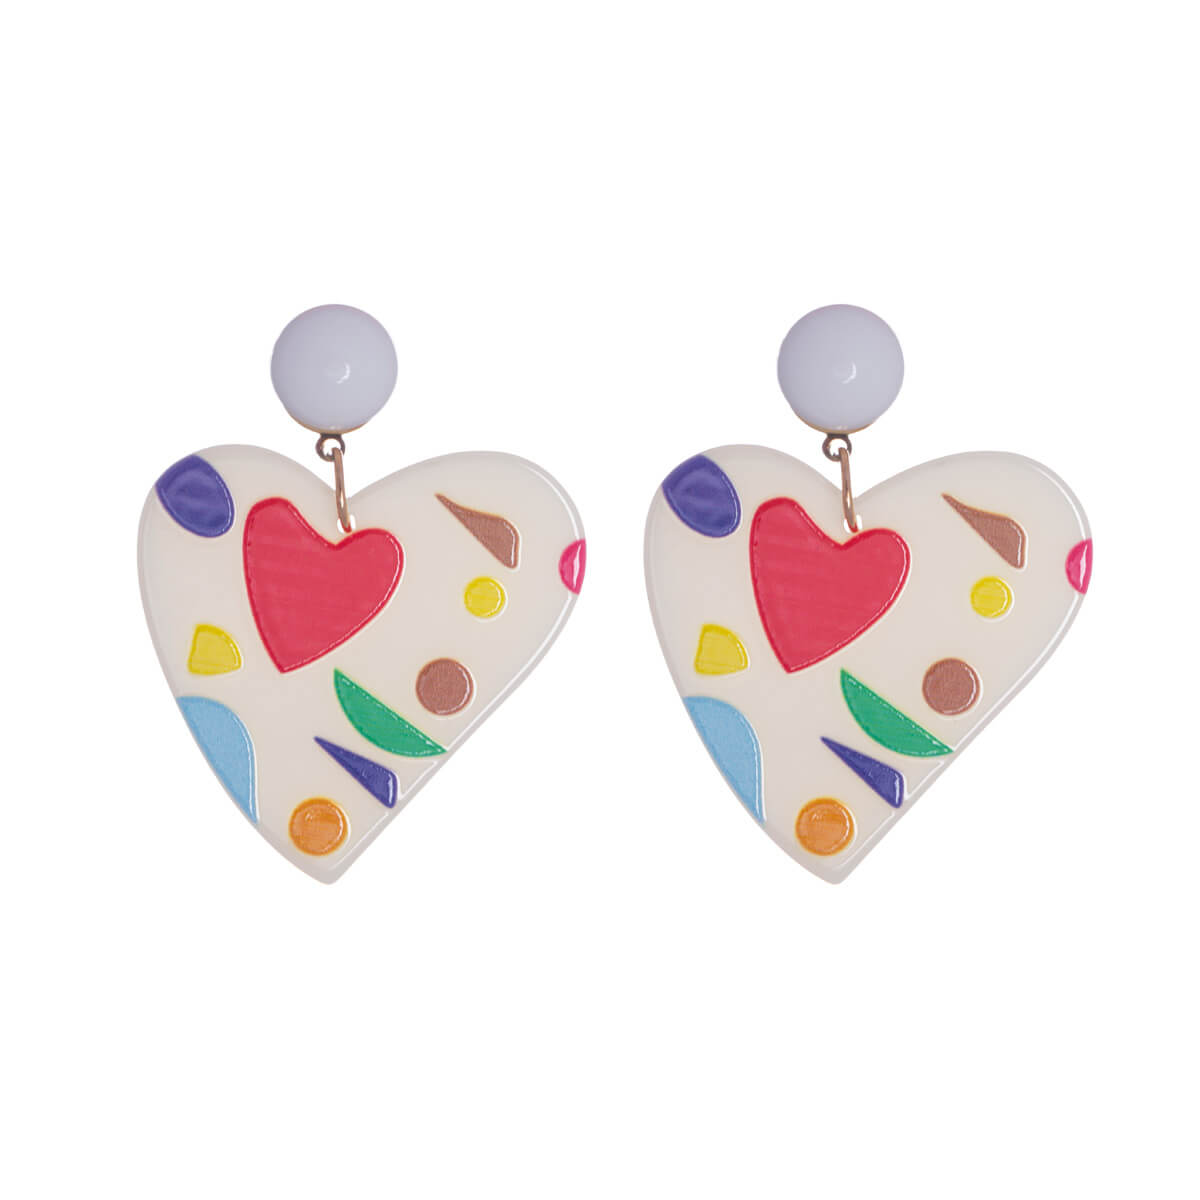 Plastic hanging heart earrings